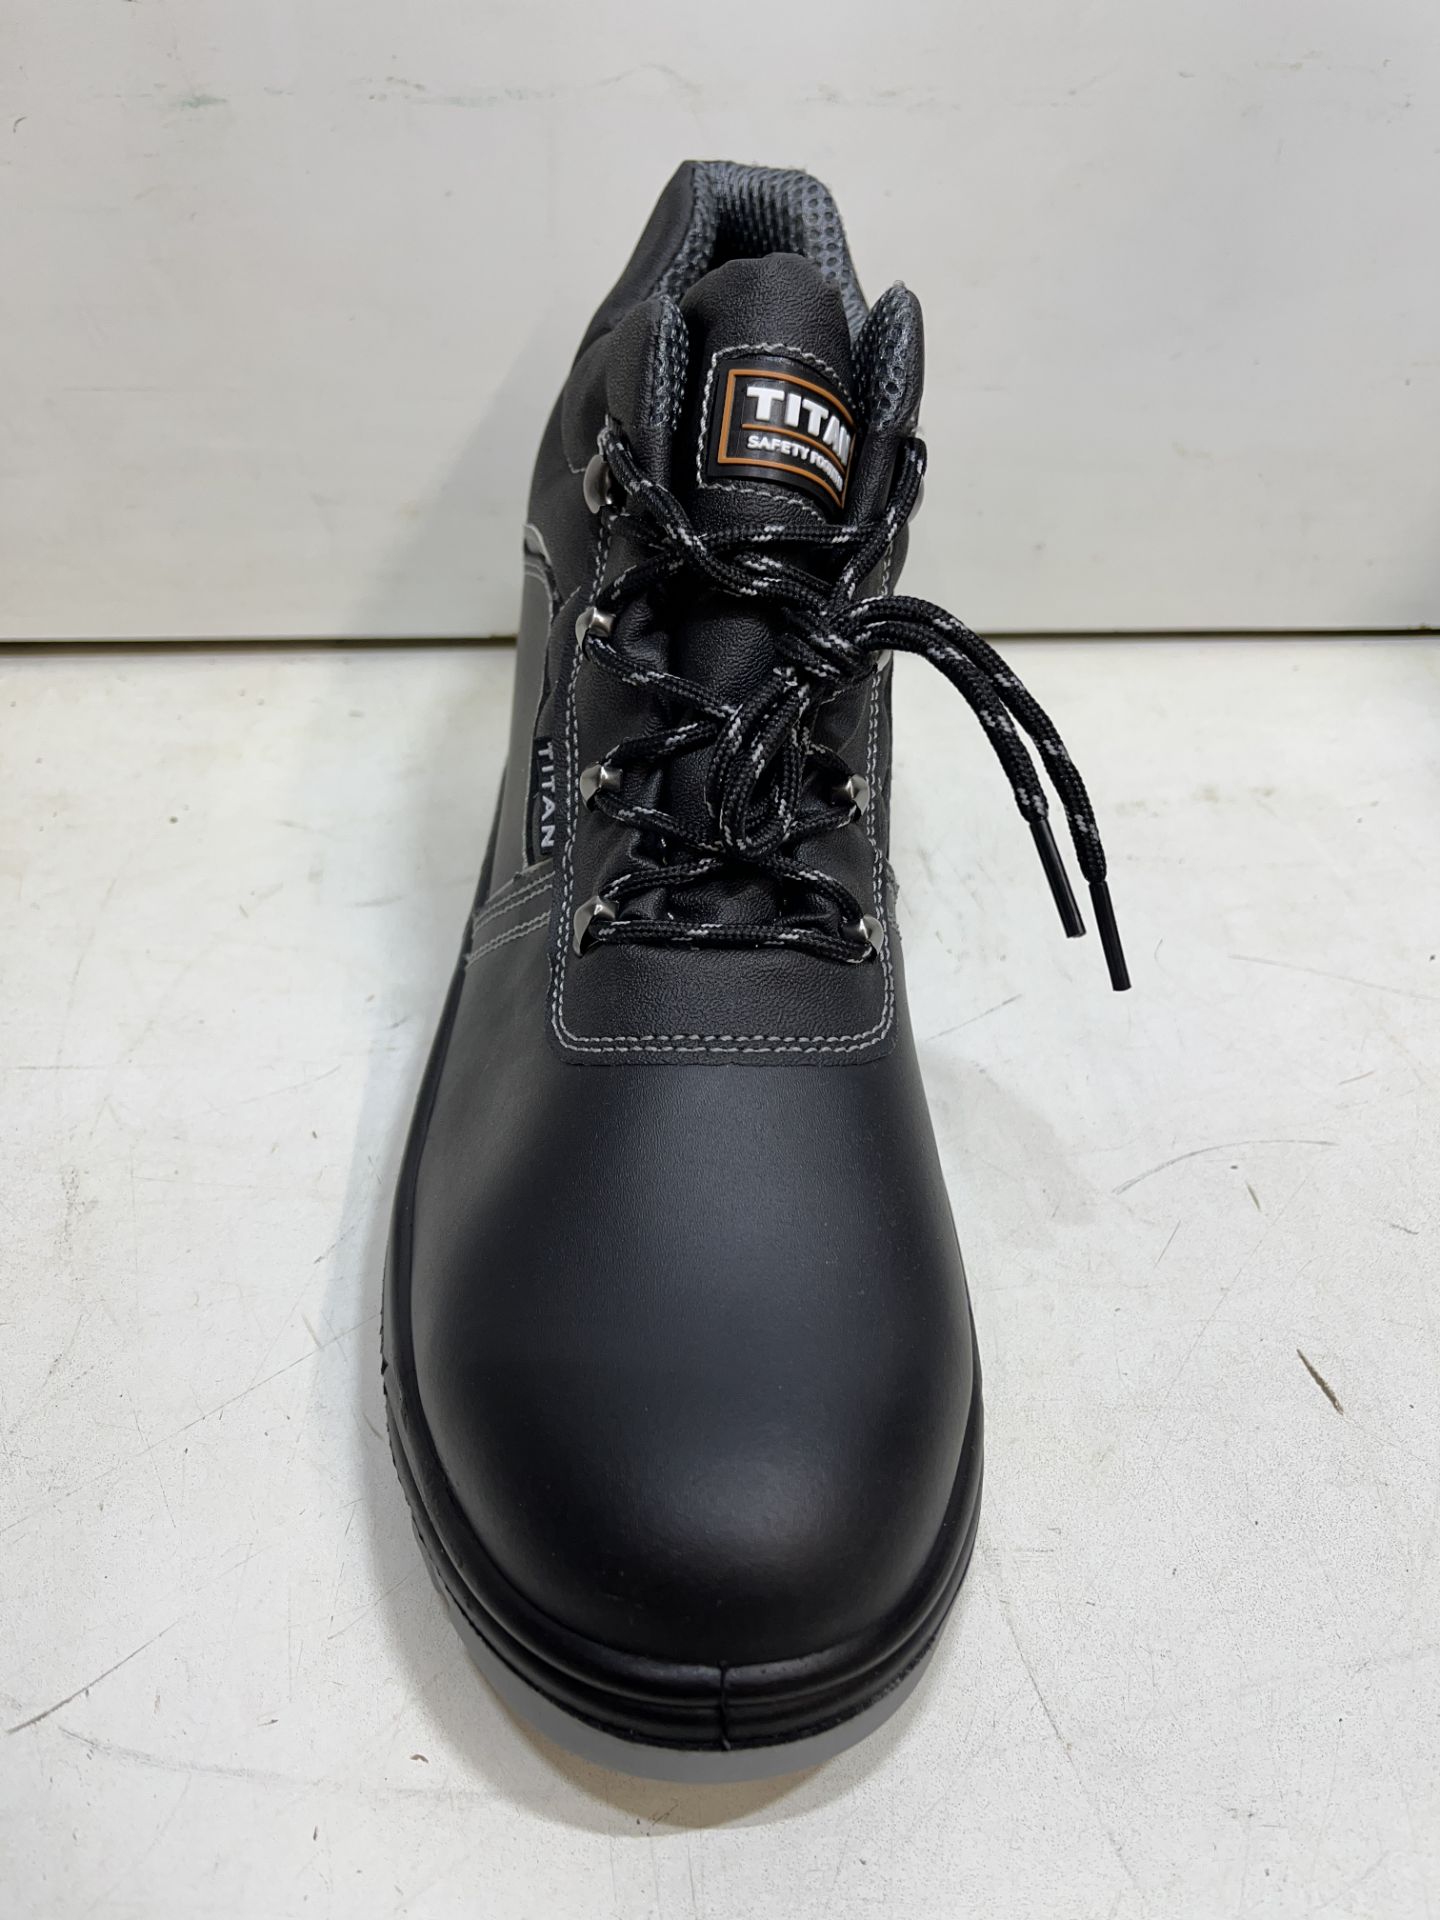 Titan Holton Black Steel Toe Cap Safety Boots | UK 11 - Image 3 of 4